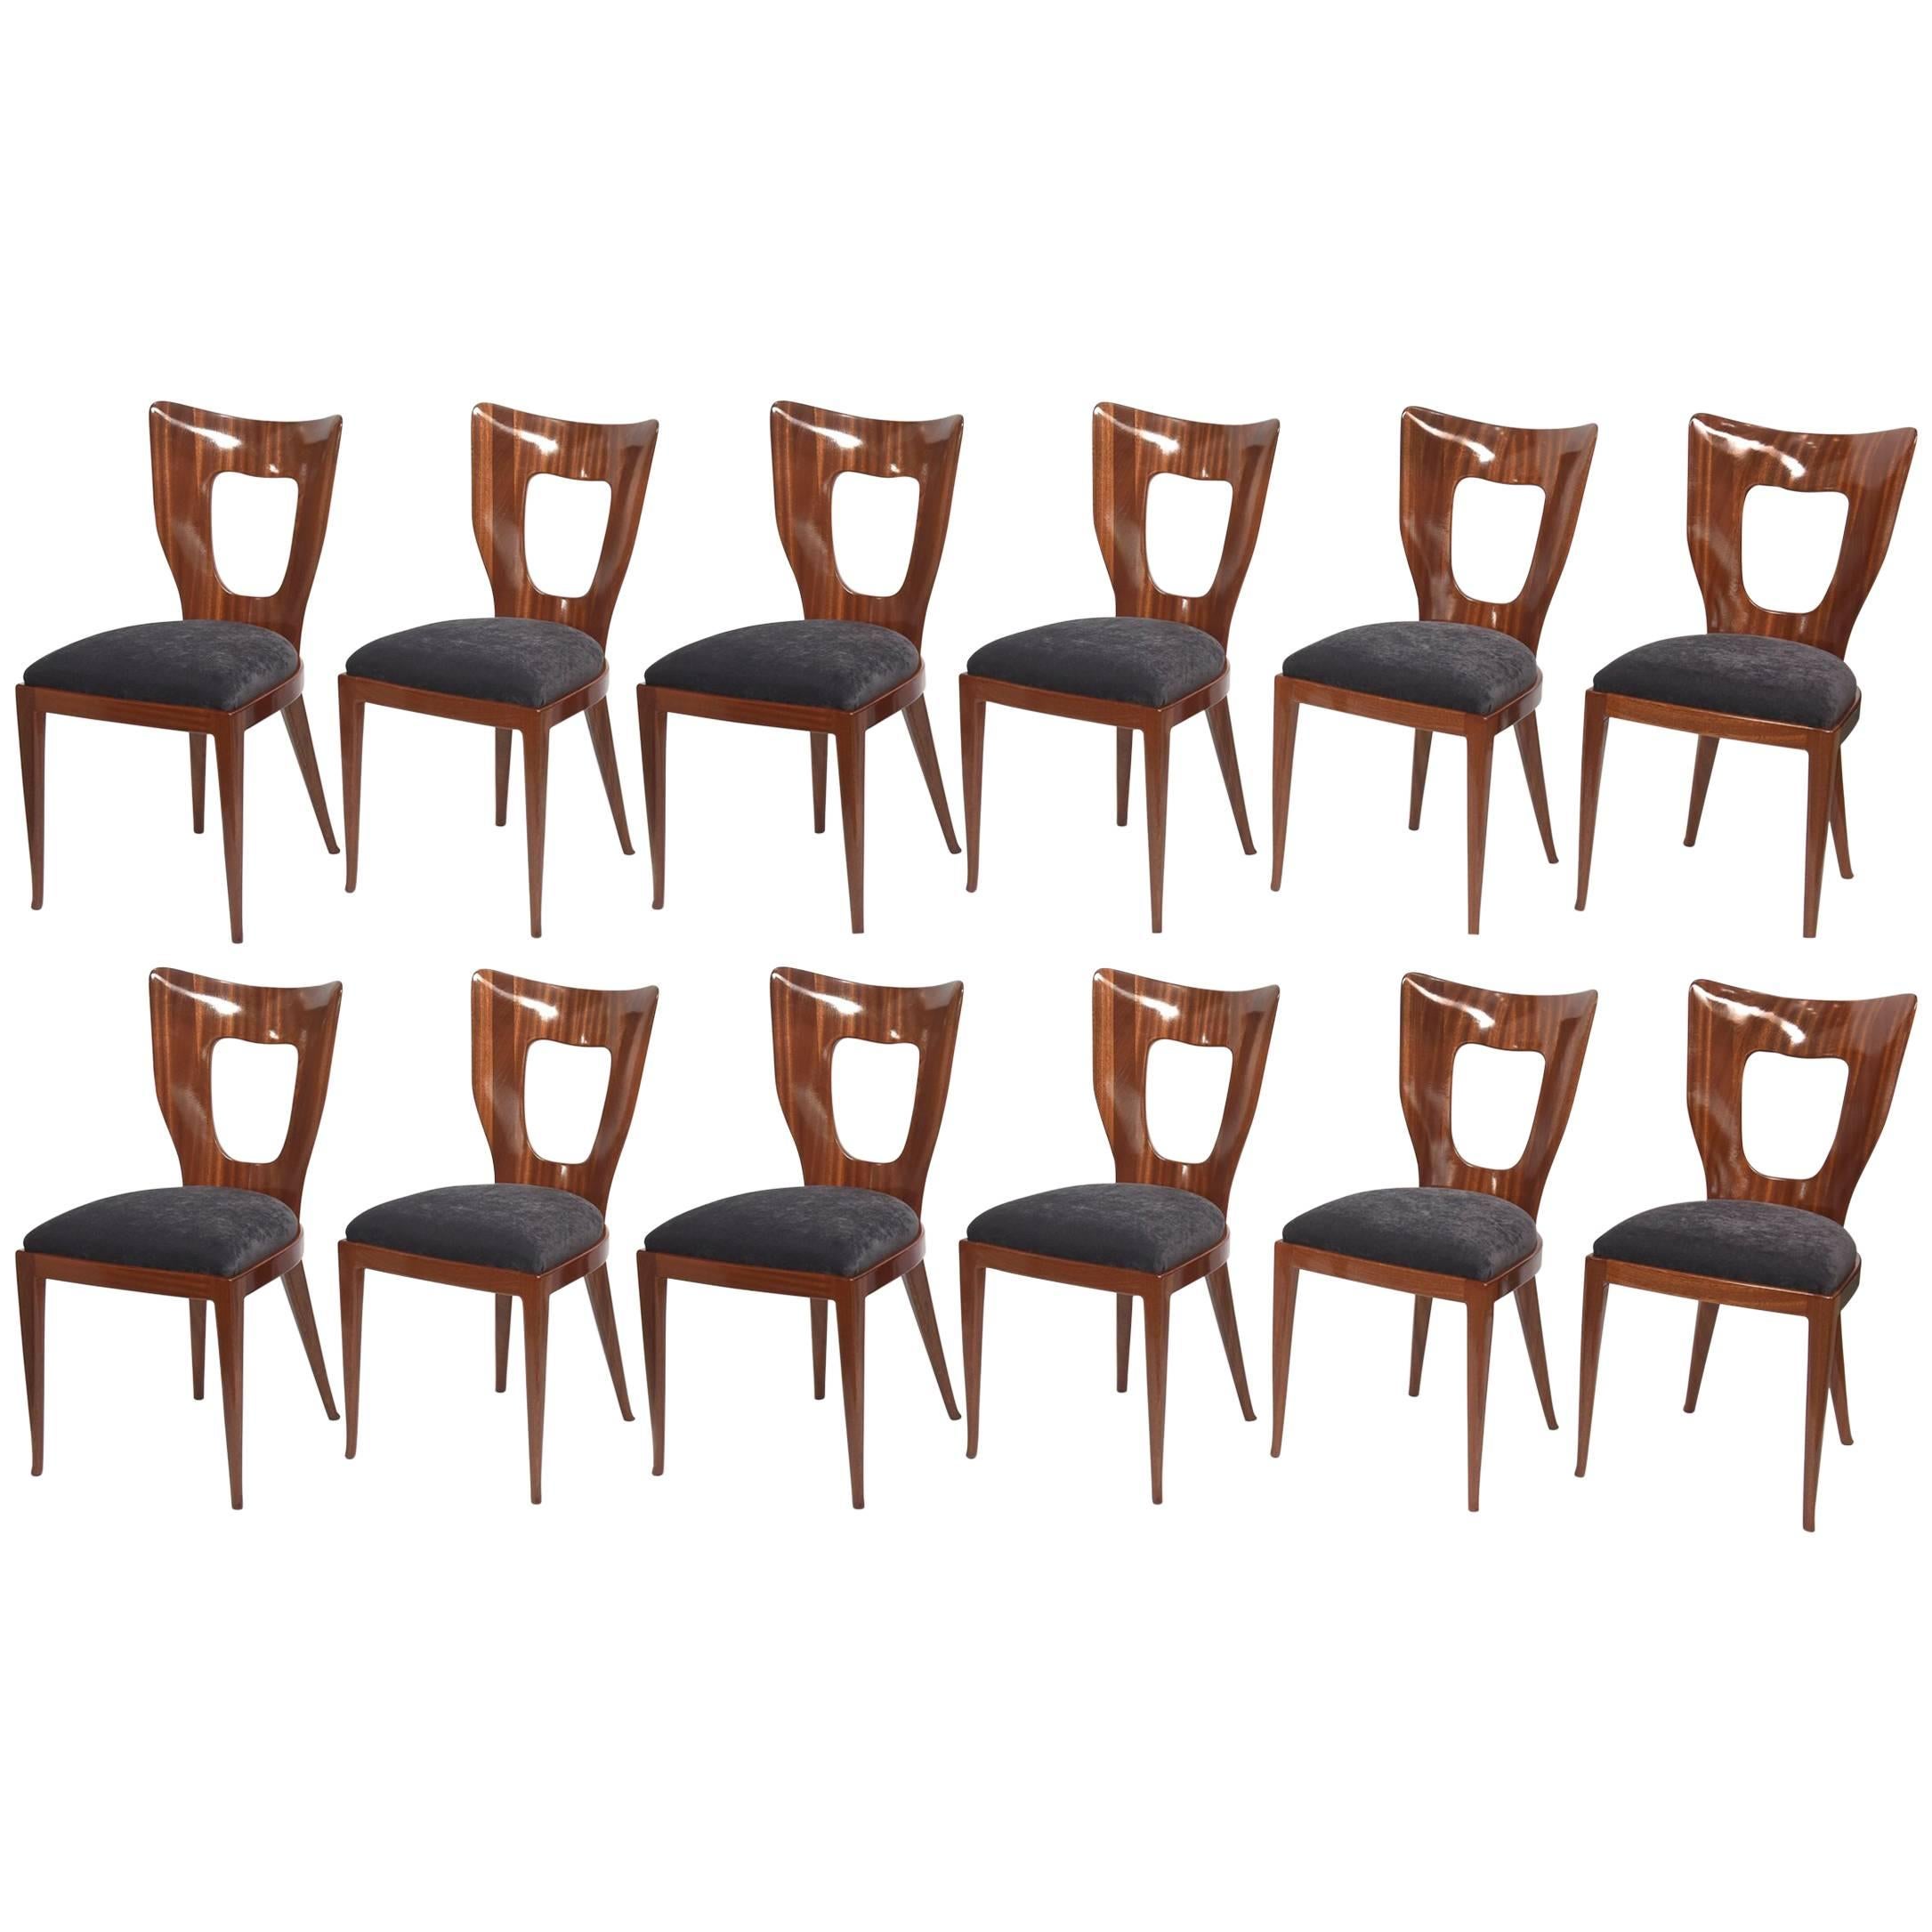 Rare Set of 16 Italian Modern Mahogany Dining Chairs, Osvaldo Borsani